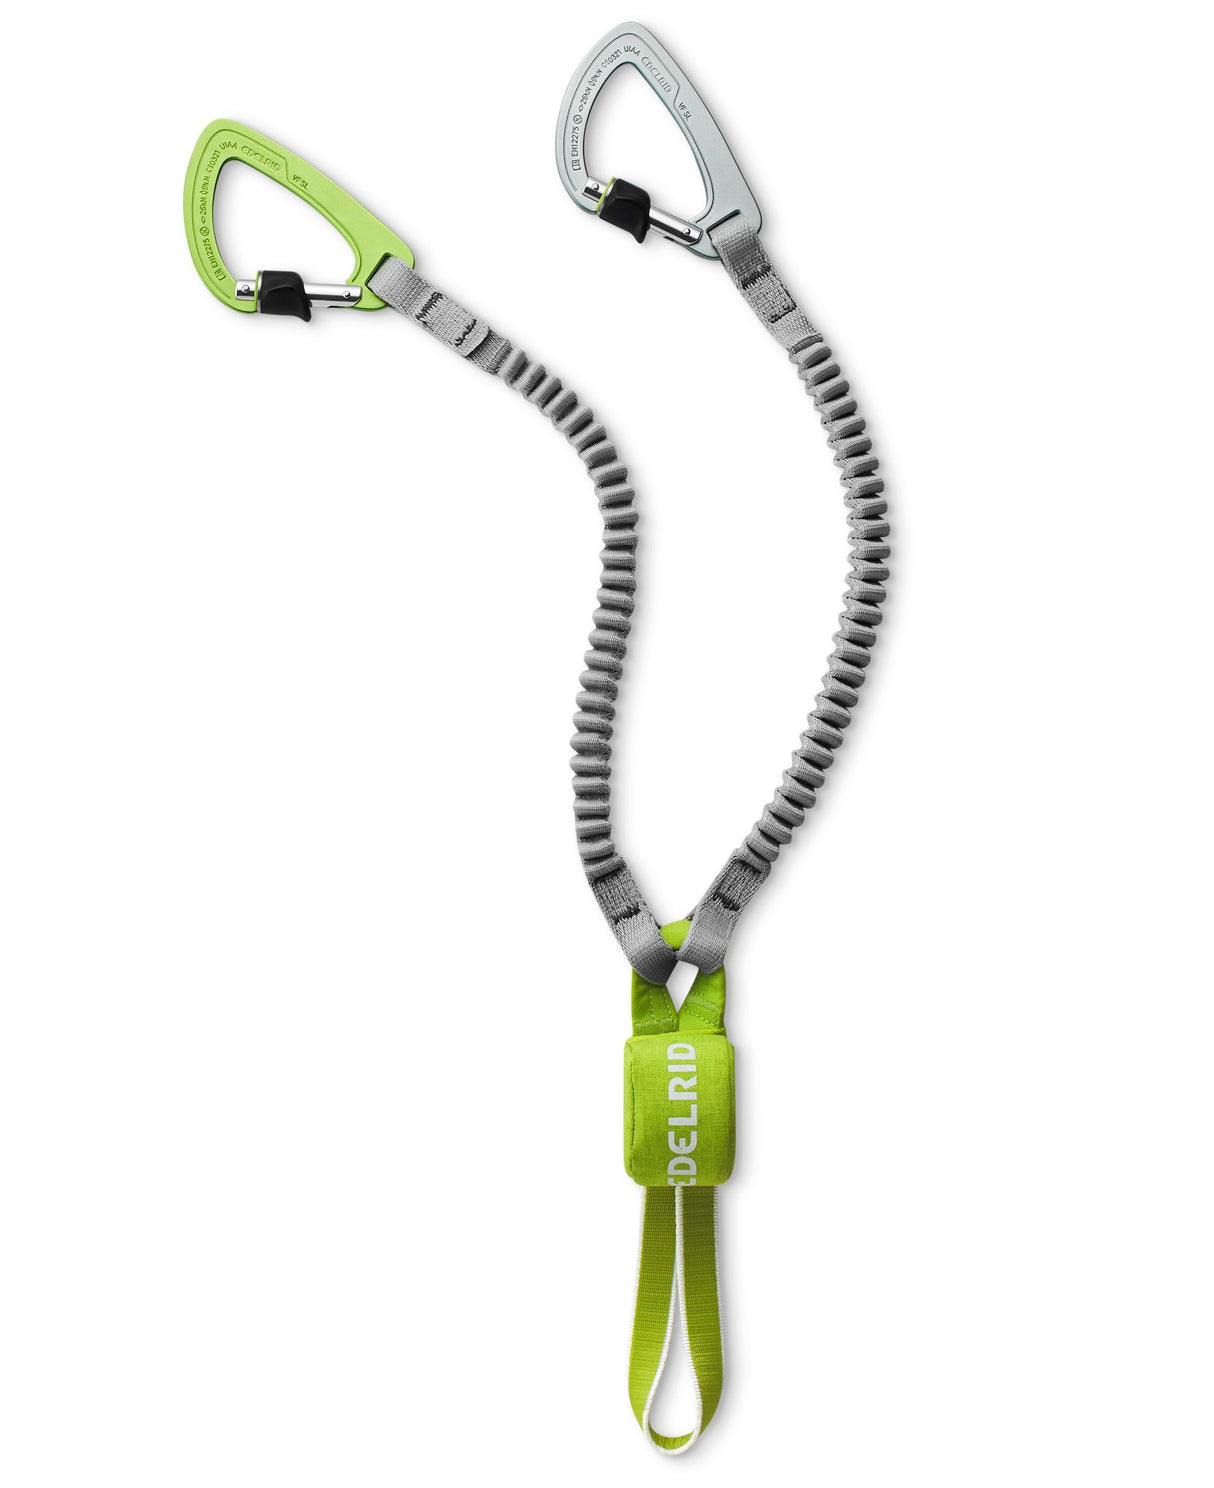 Edelrid Klettersteigset Cable Kit Ultralite VI (sehr leichtes Klettersteigset)